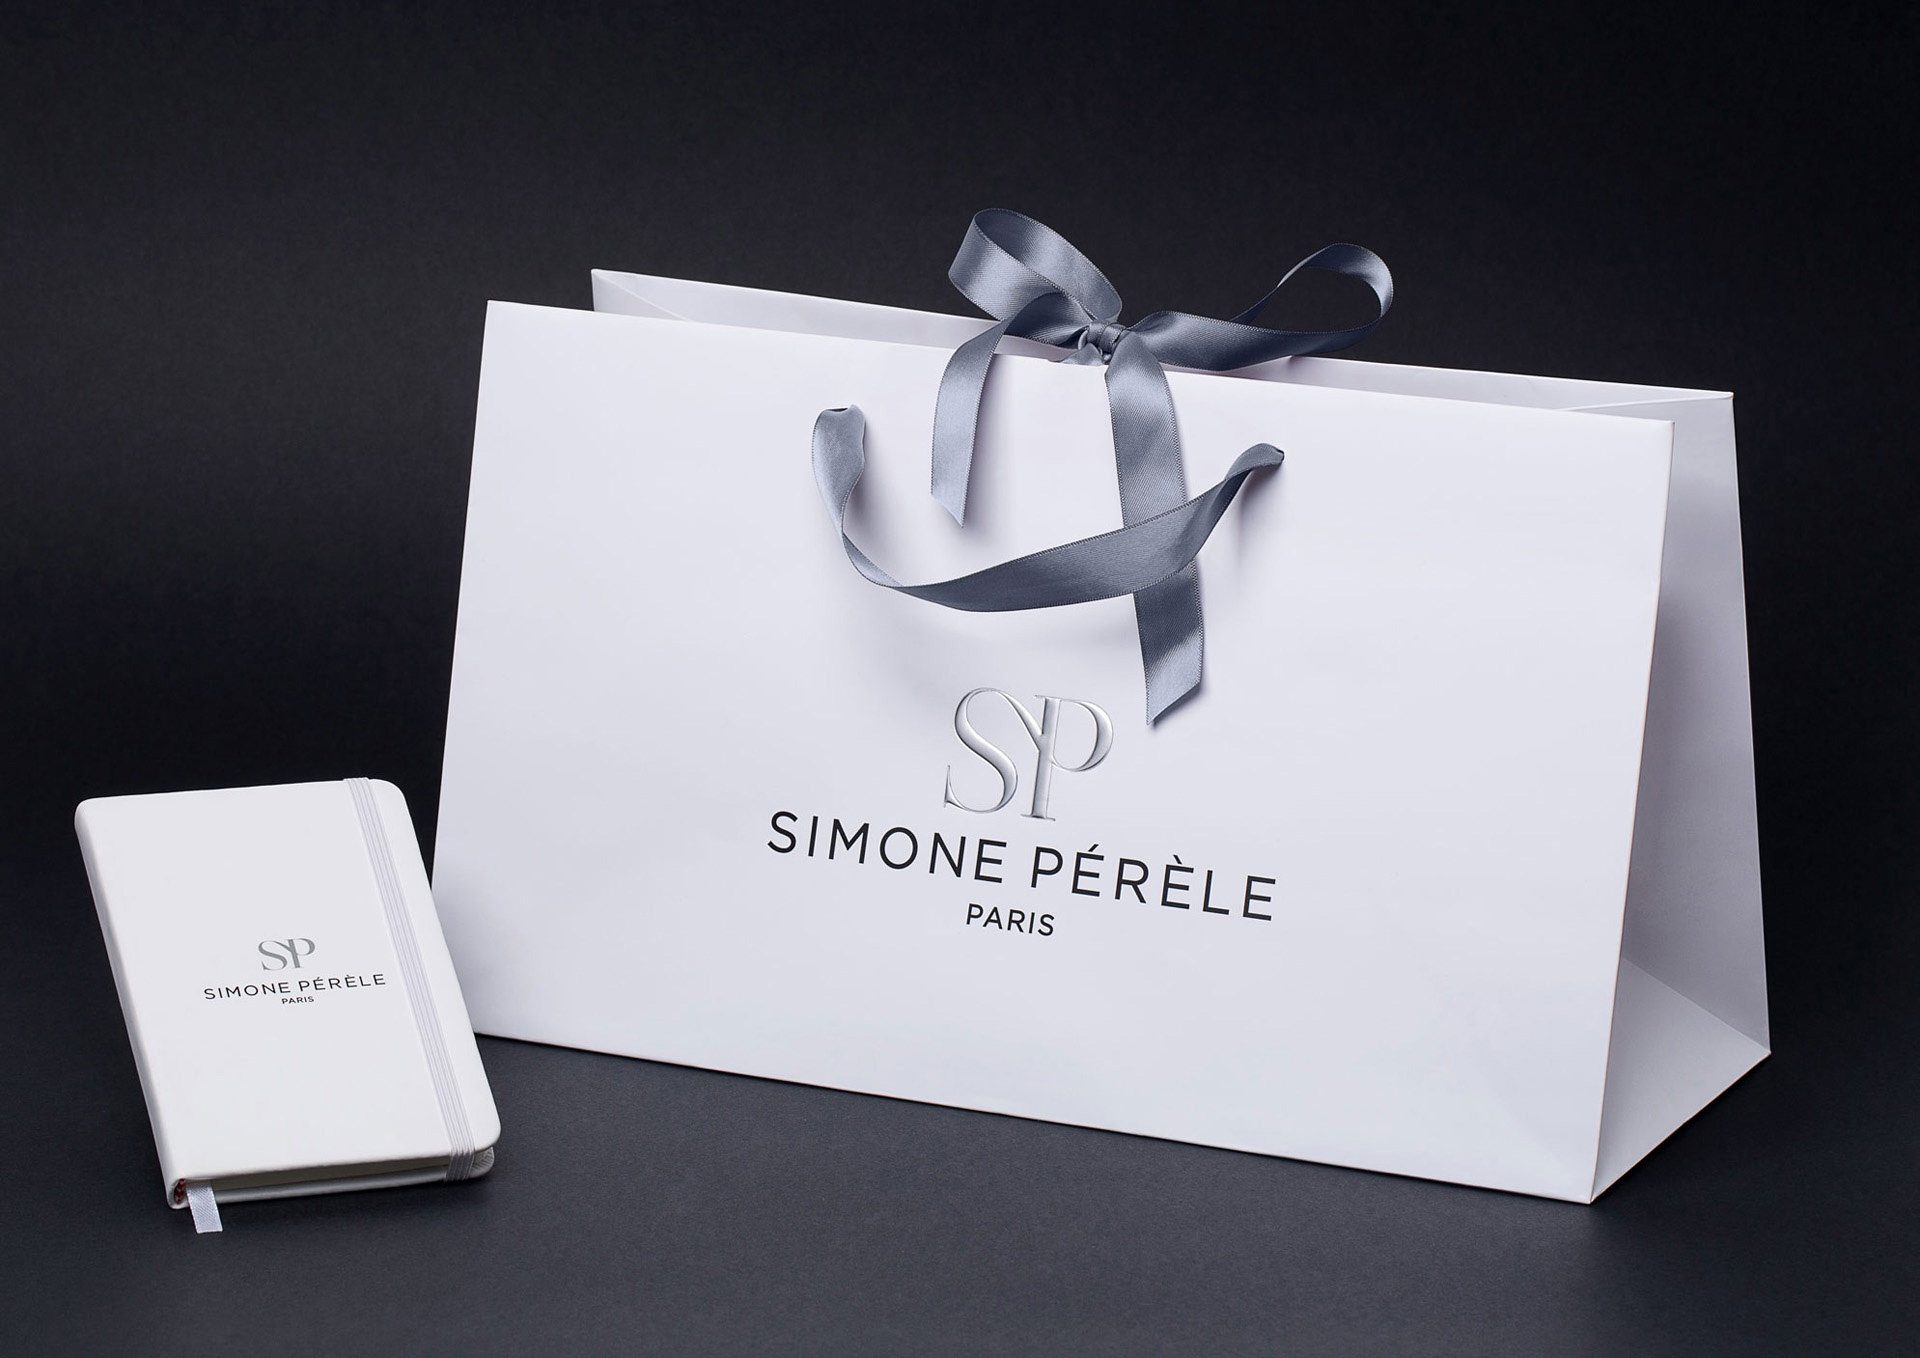 SIL Names French Lingerie Brand Simone Pérèle Designer of the Year